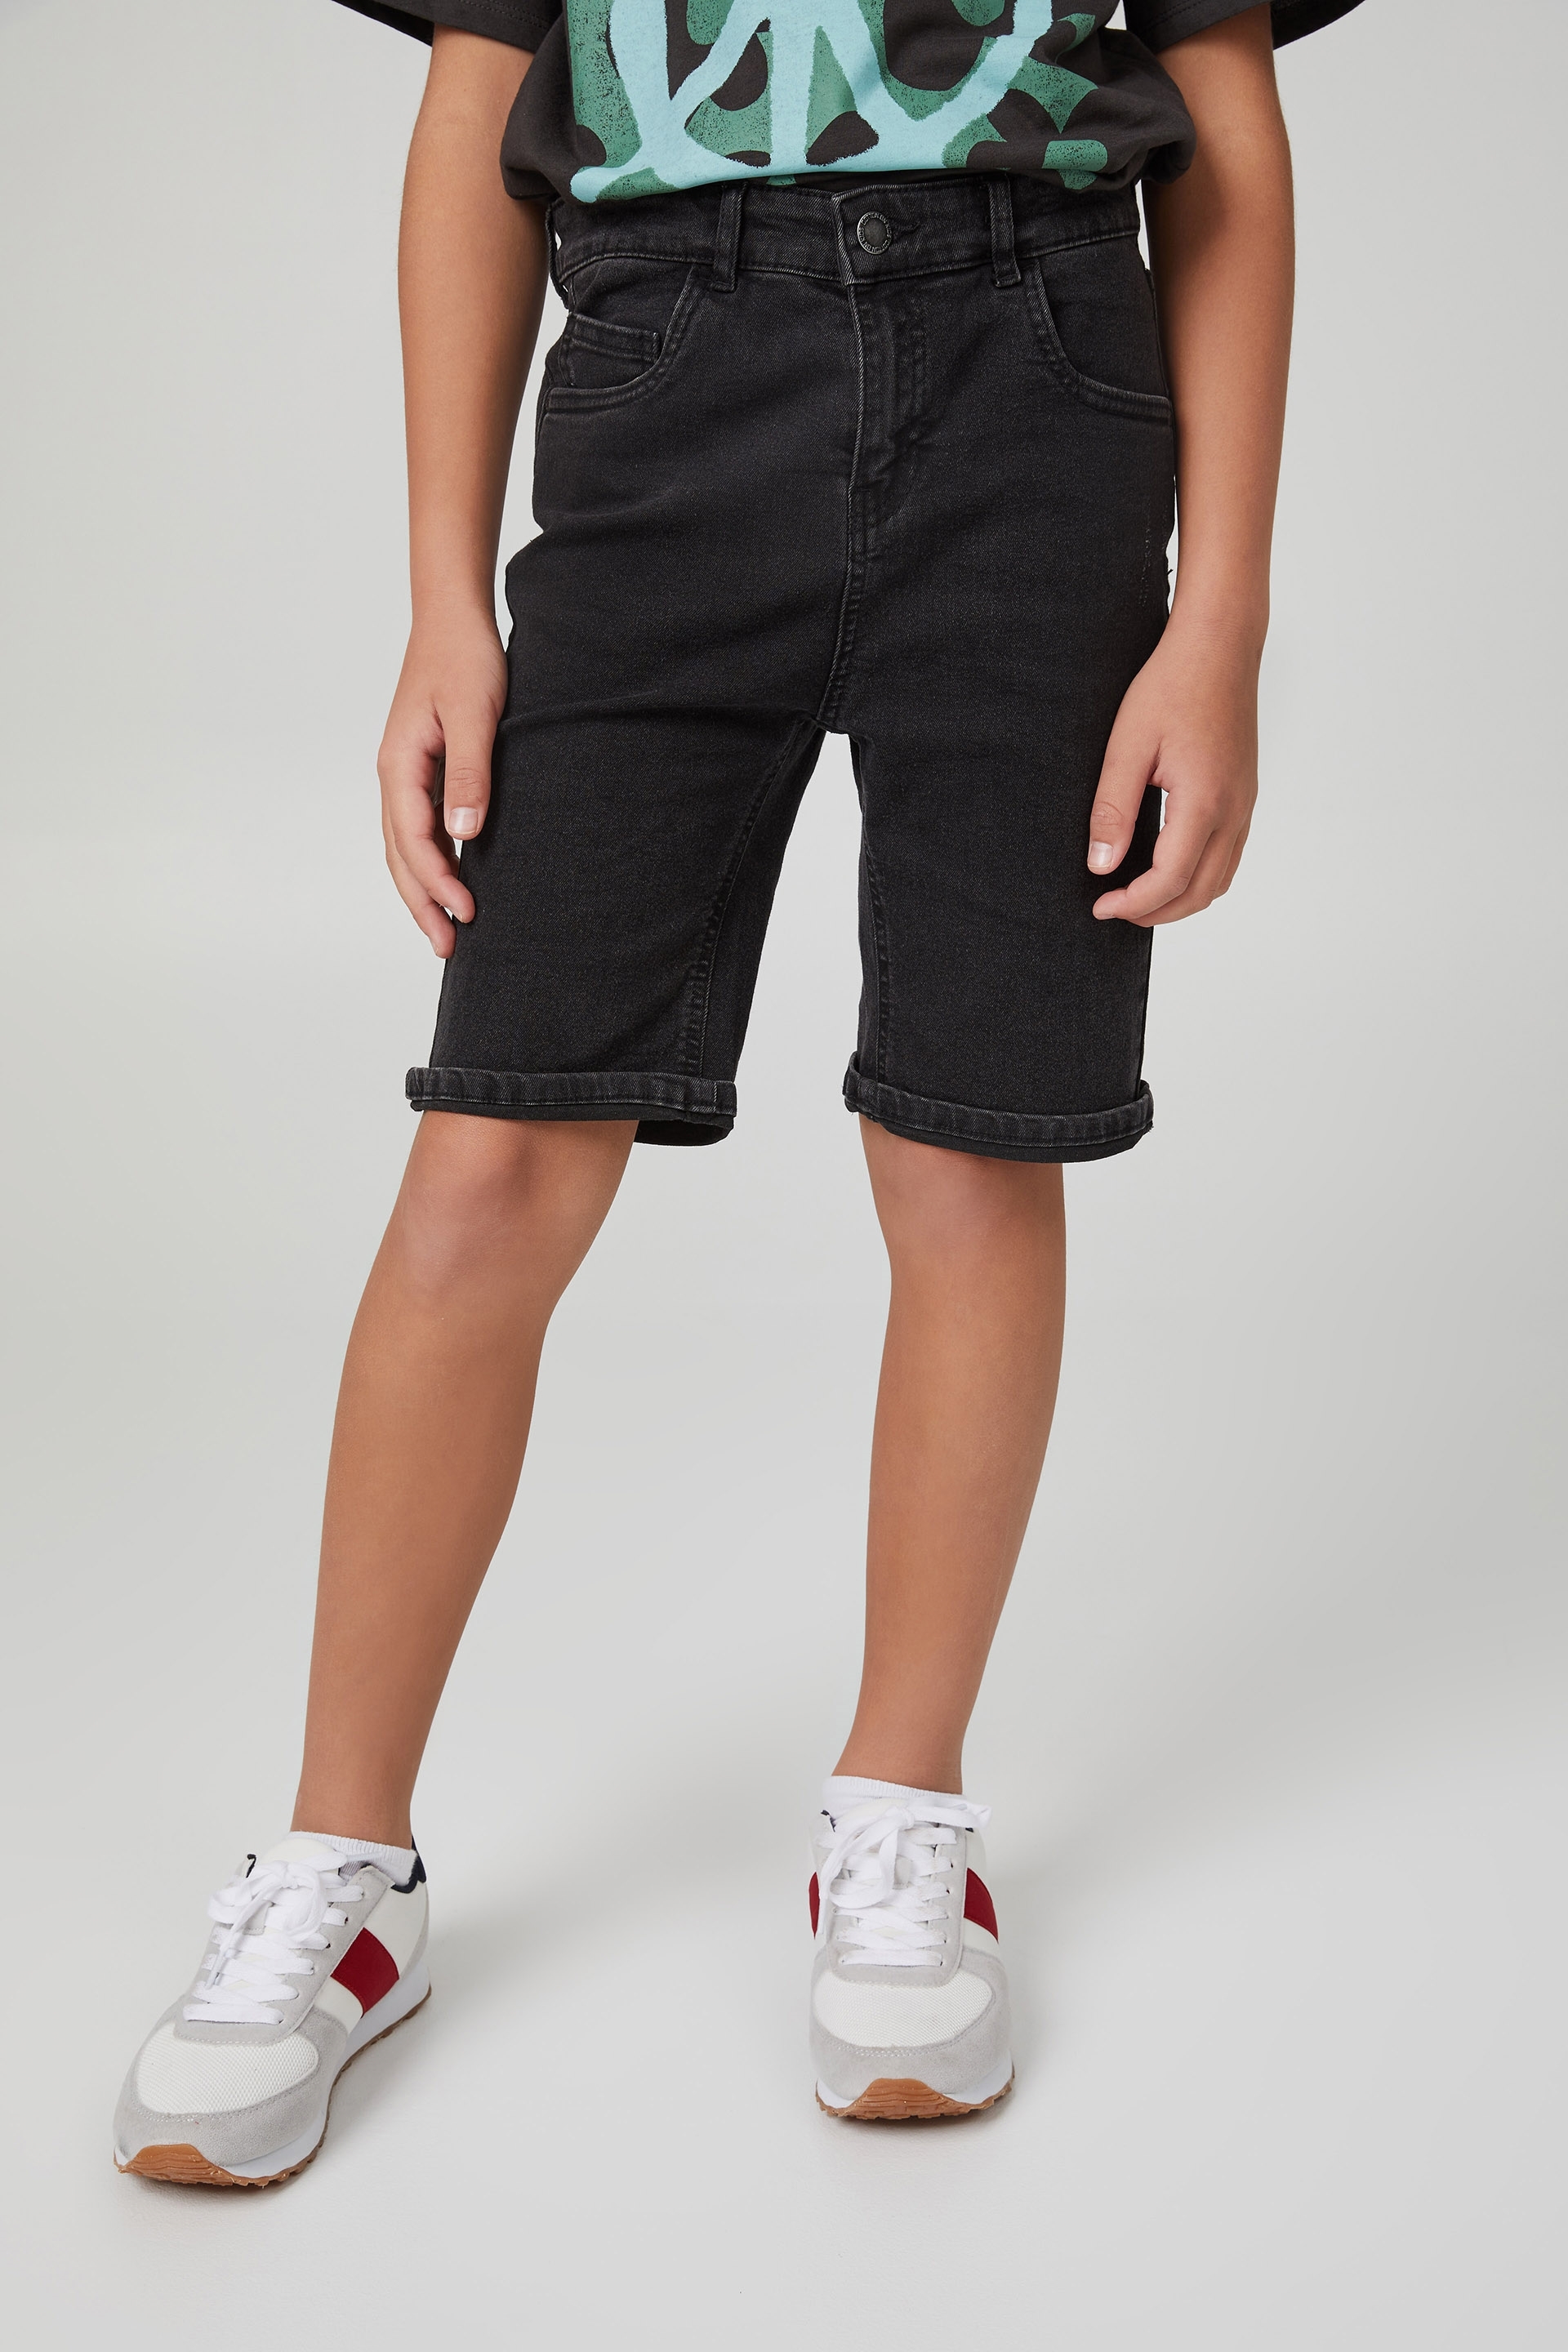 Cotton On Kids - Super Slim Fit Short - Burleigh black